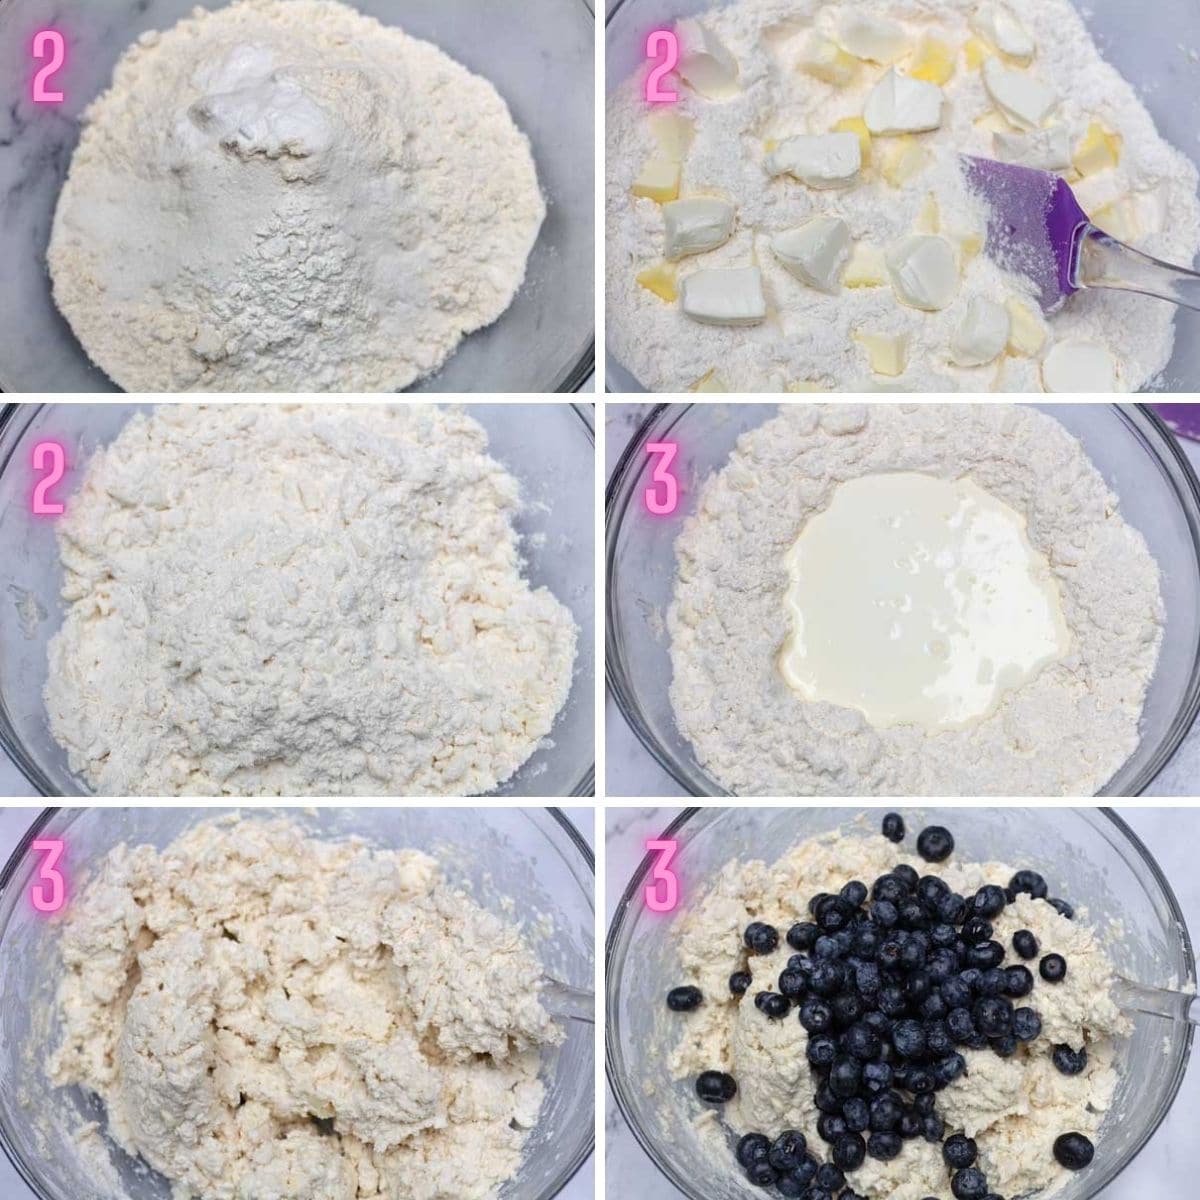 Blue cream cheese sconesprocess sequence 1.